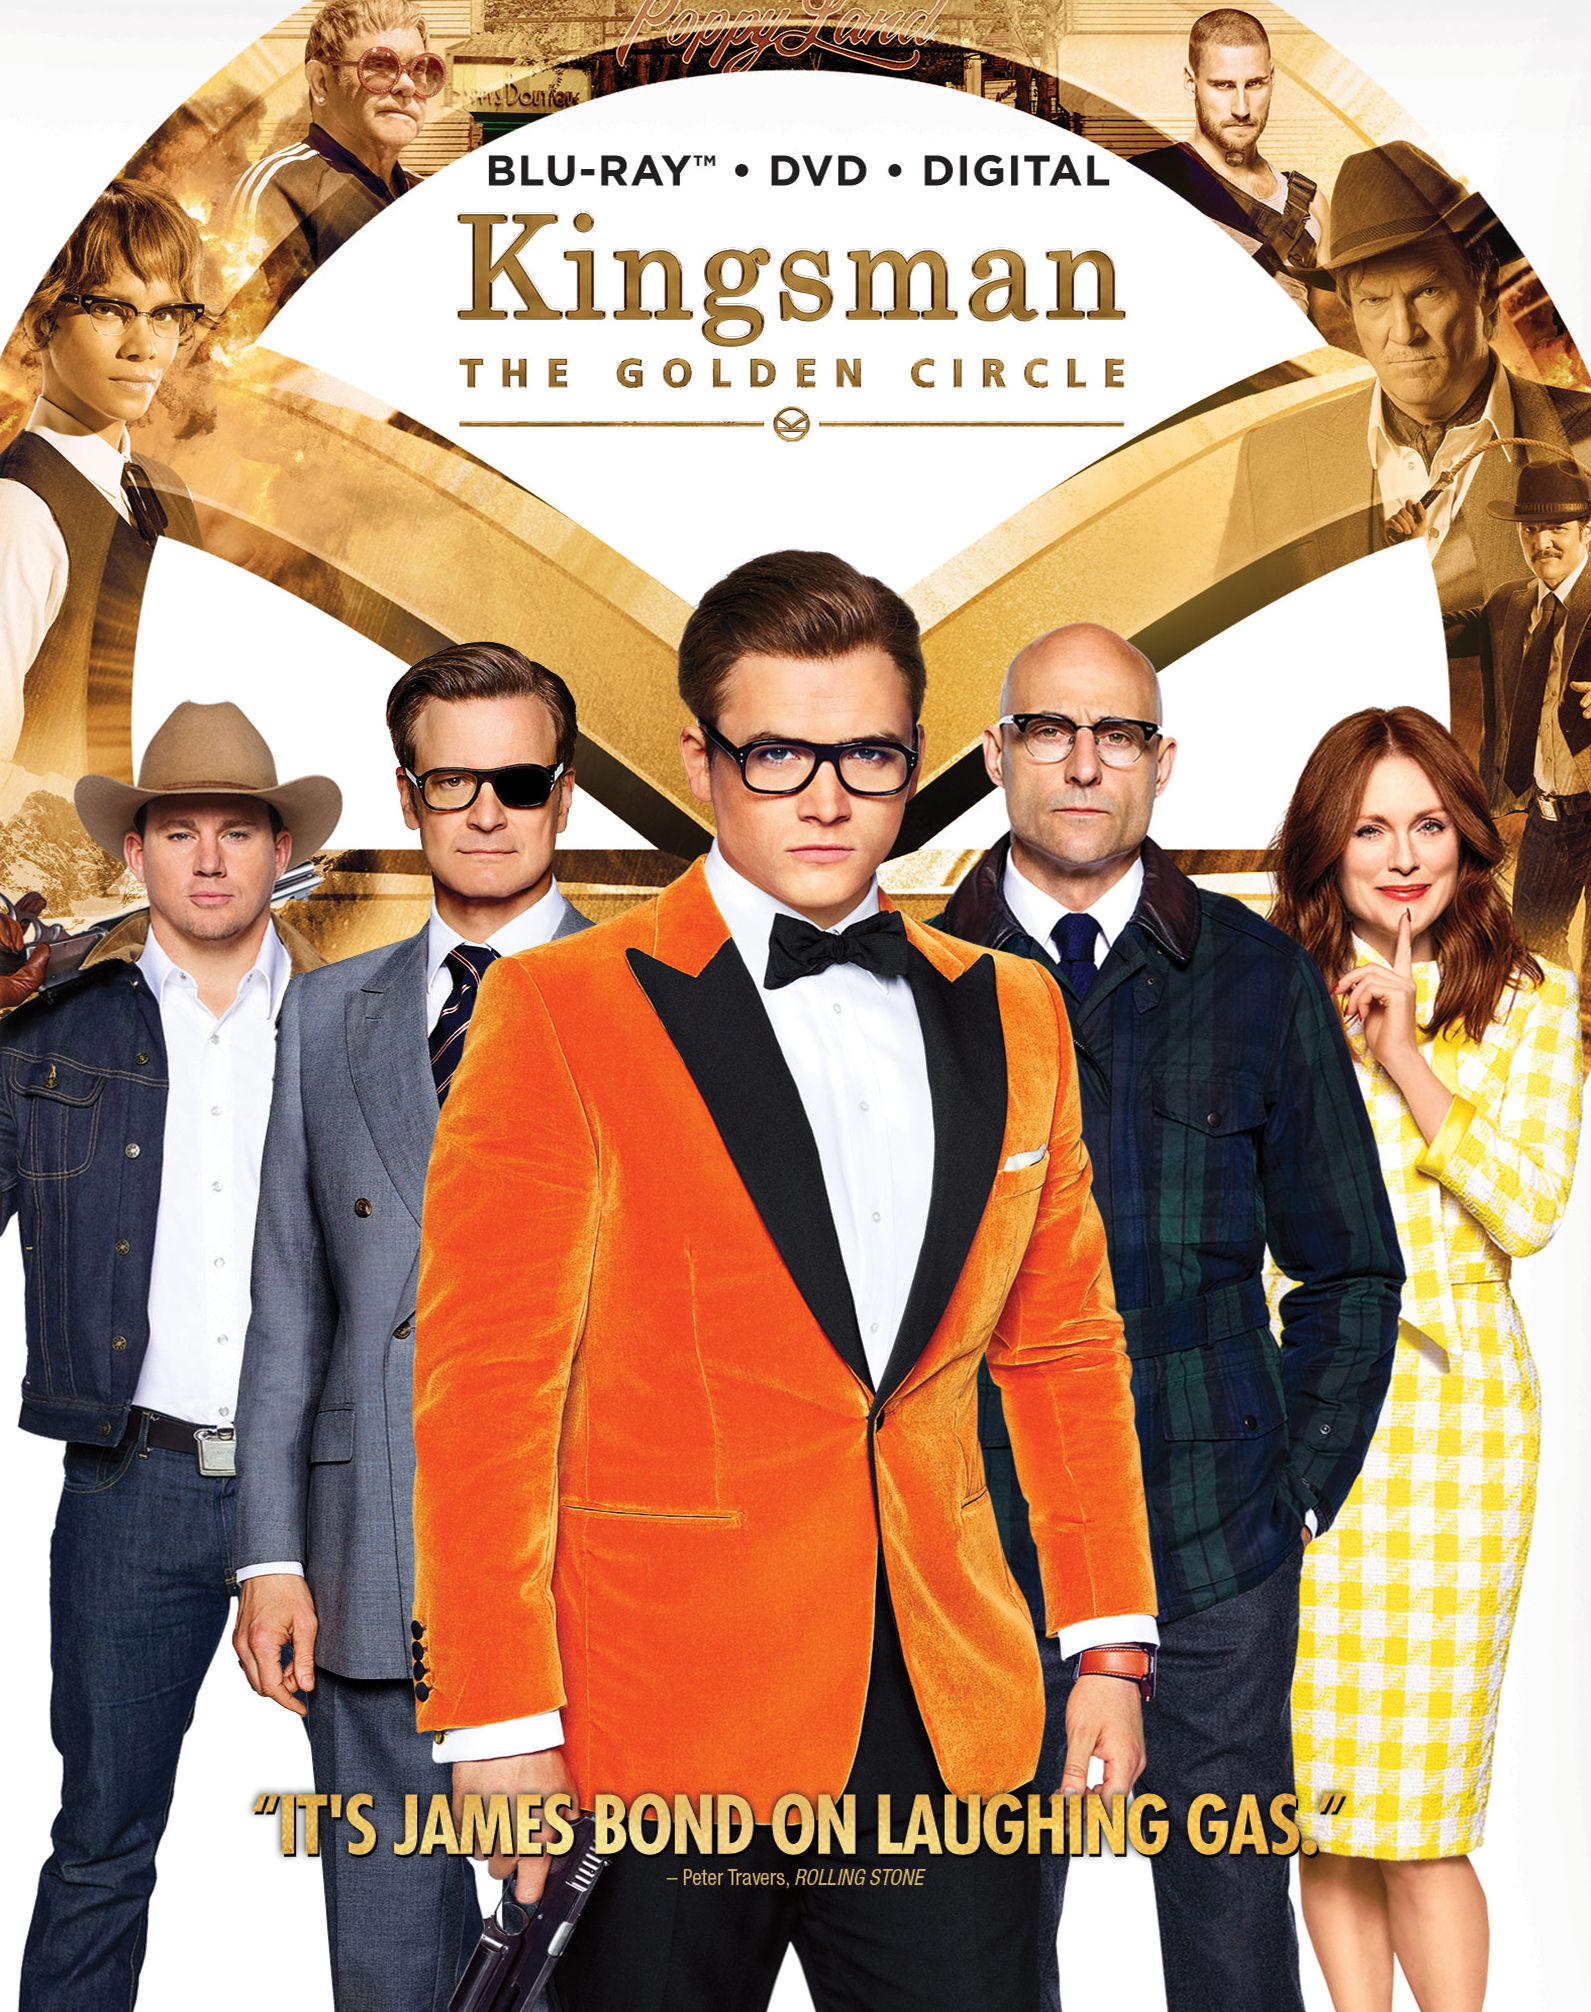 Kingsman: The Secret Service Blu-ray (Blu-ray + Digital HD)